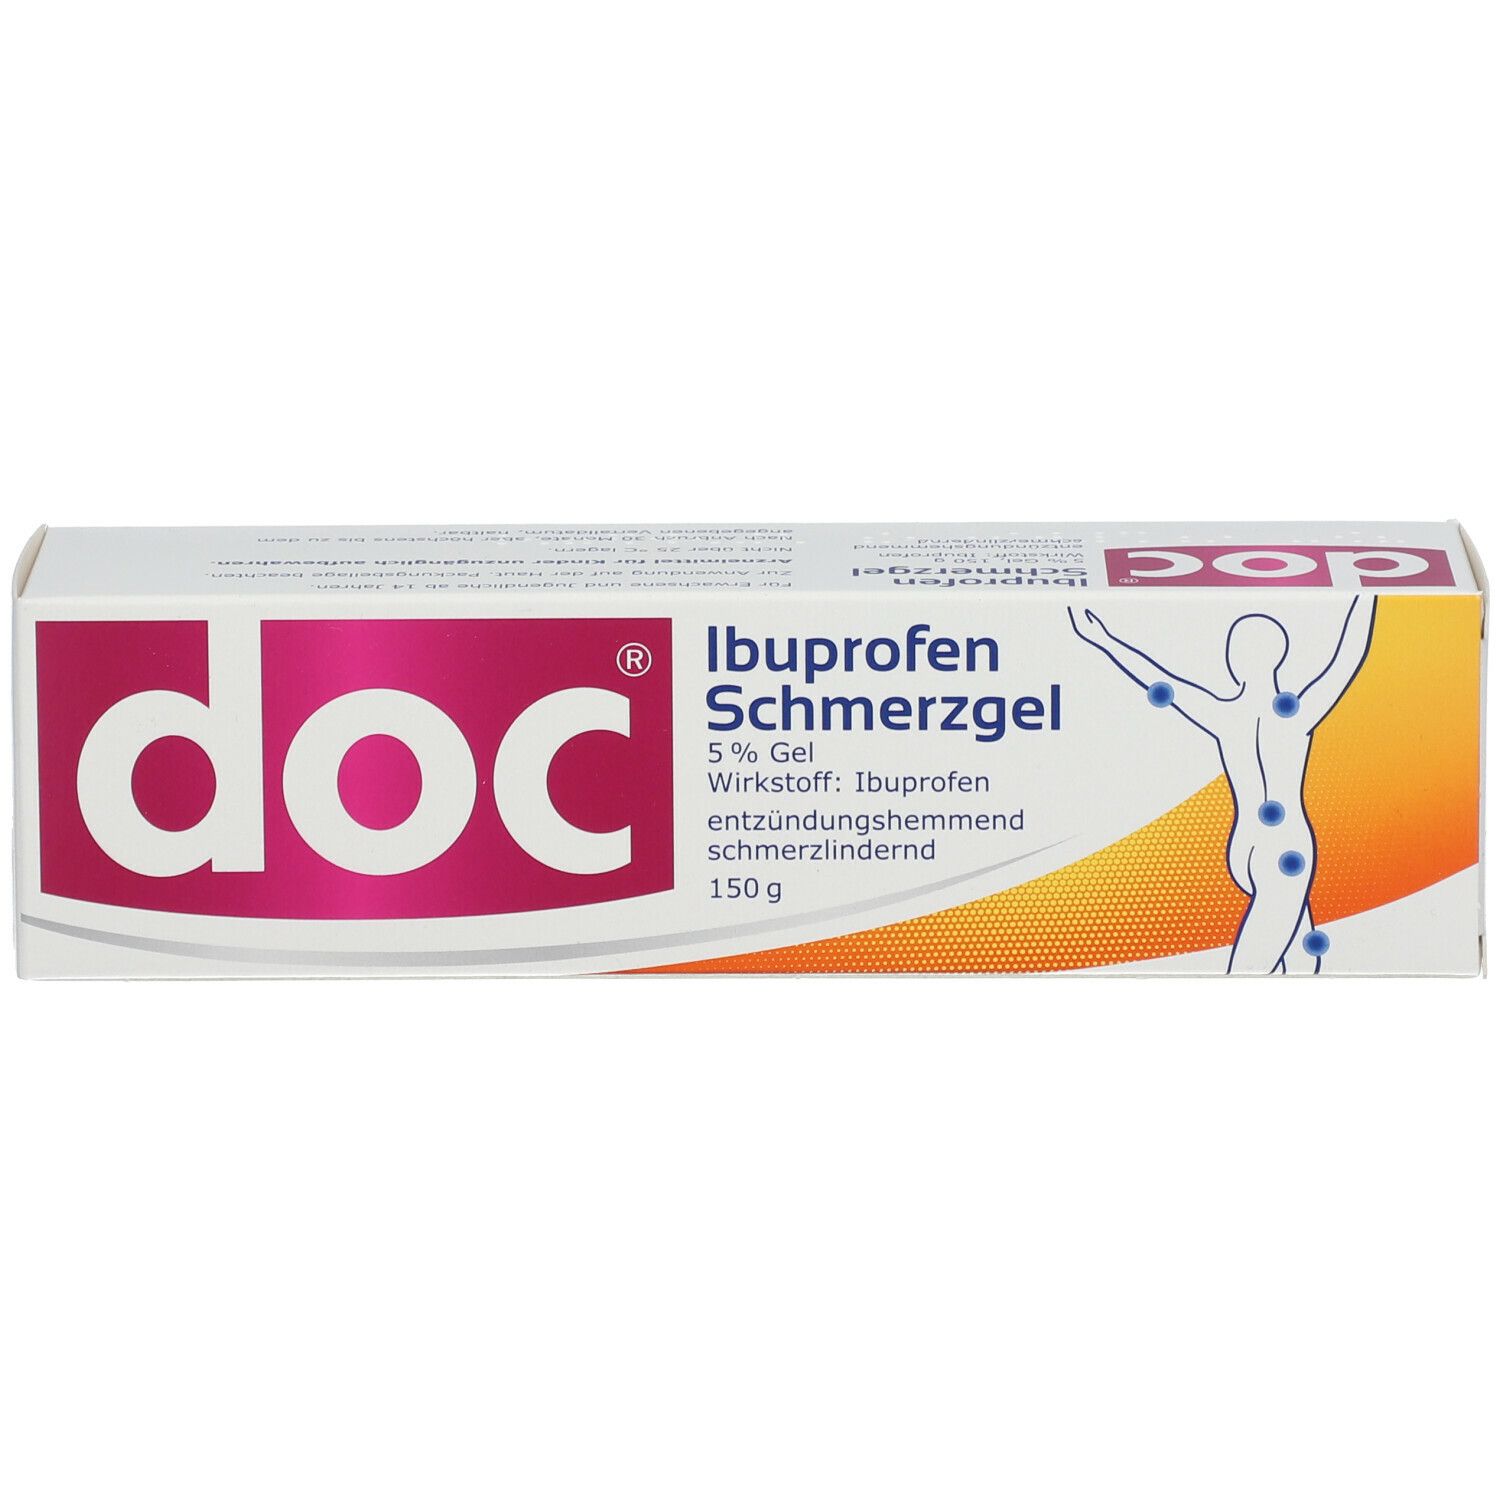 doc® Ibuprofen Schmerzgel 5%